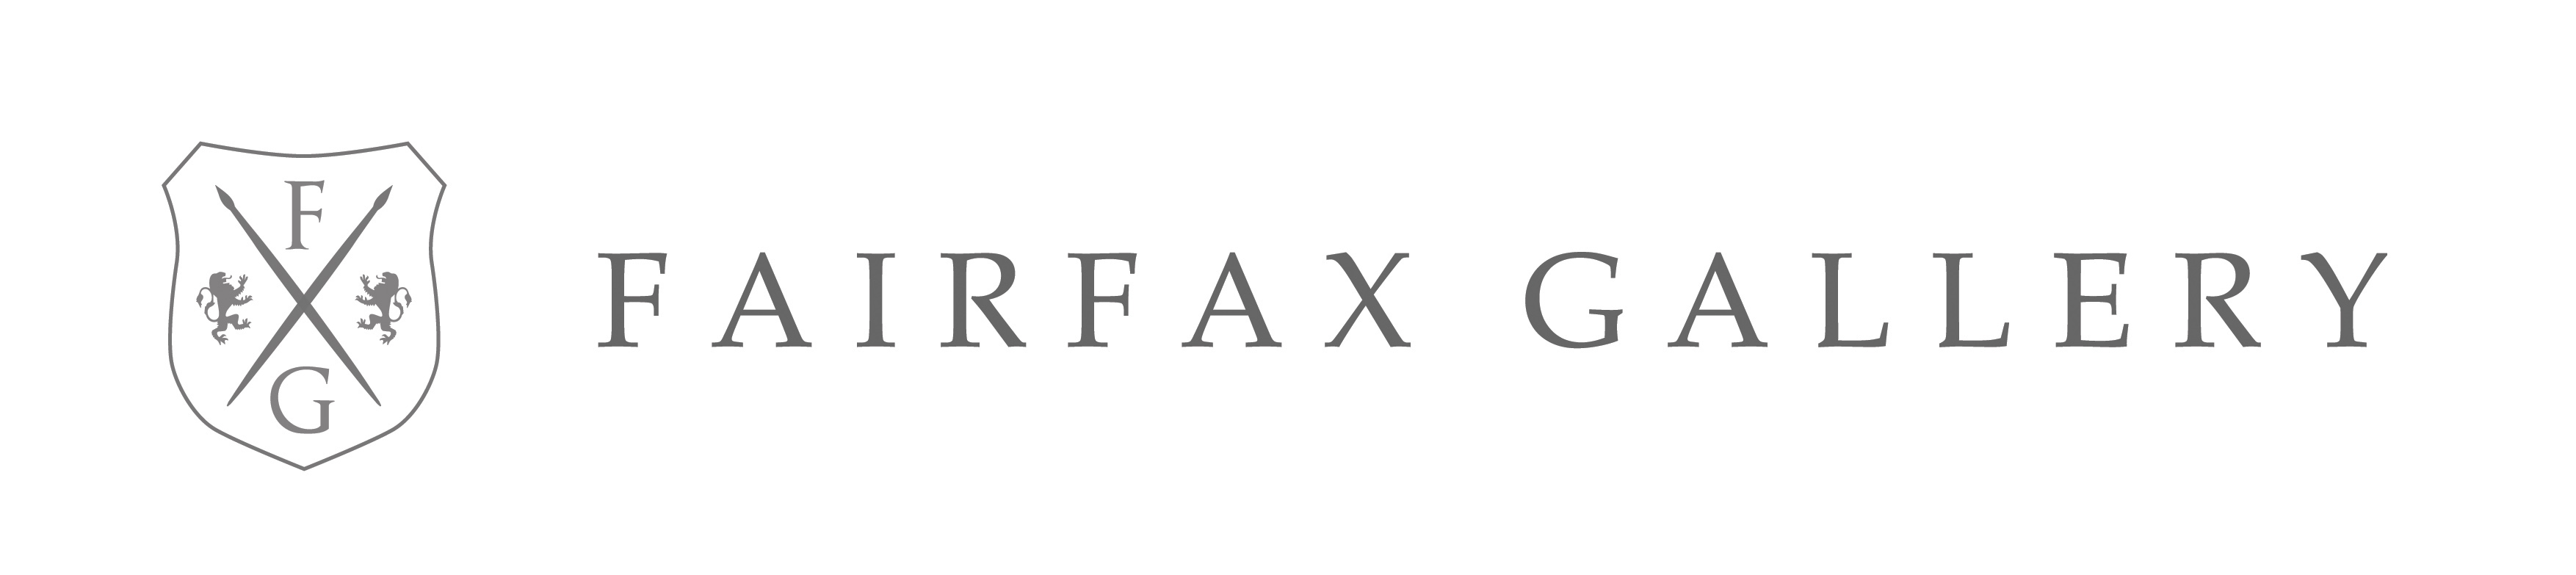 FAIRFAX GALLERY logo